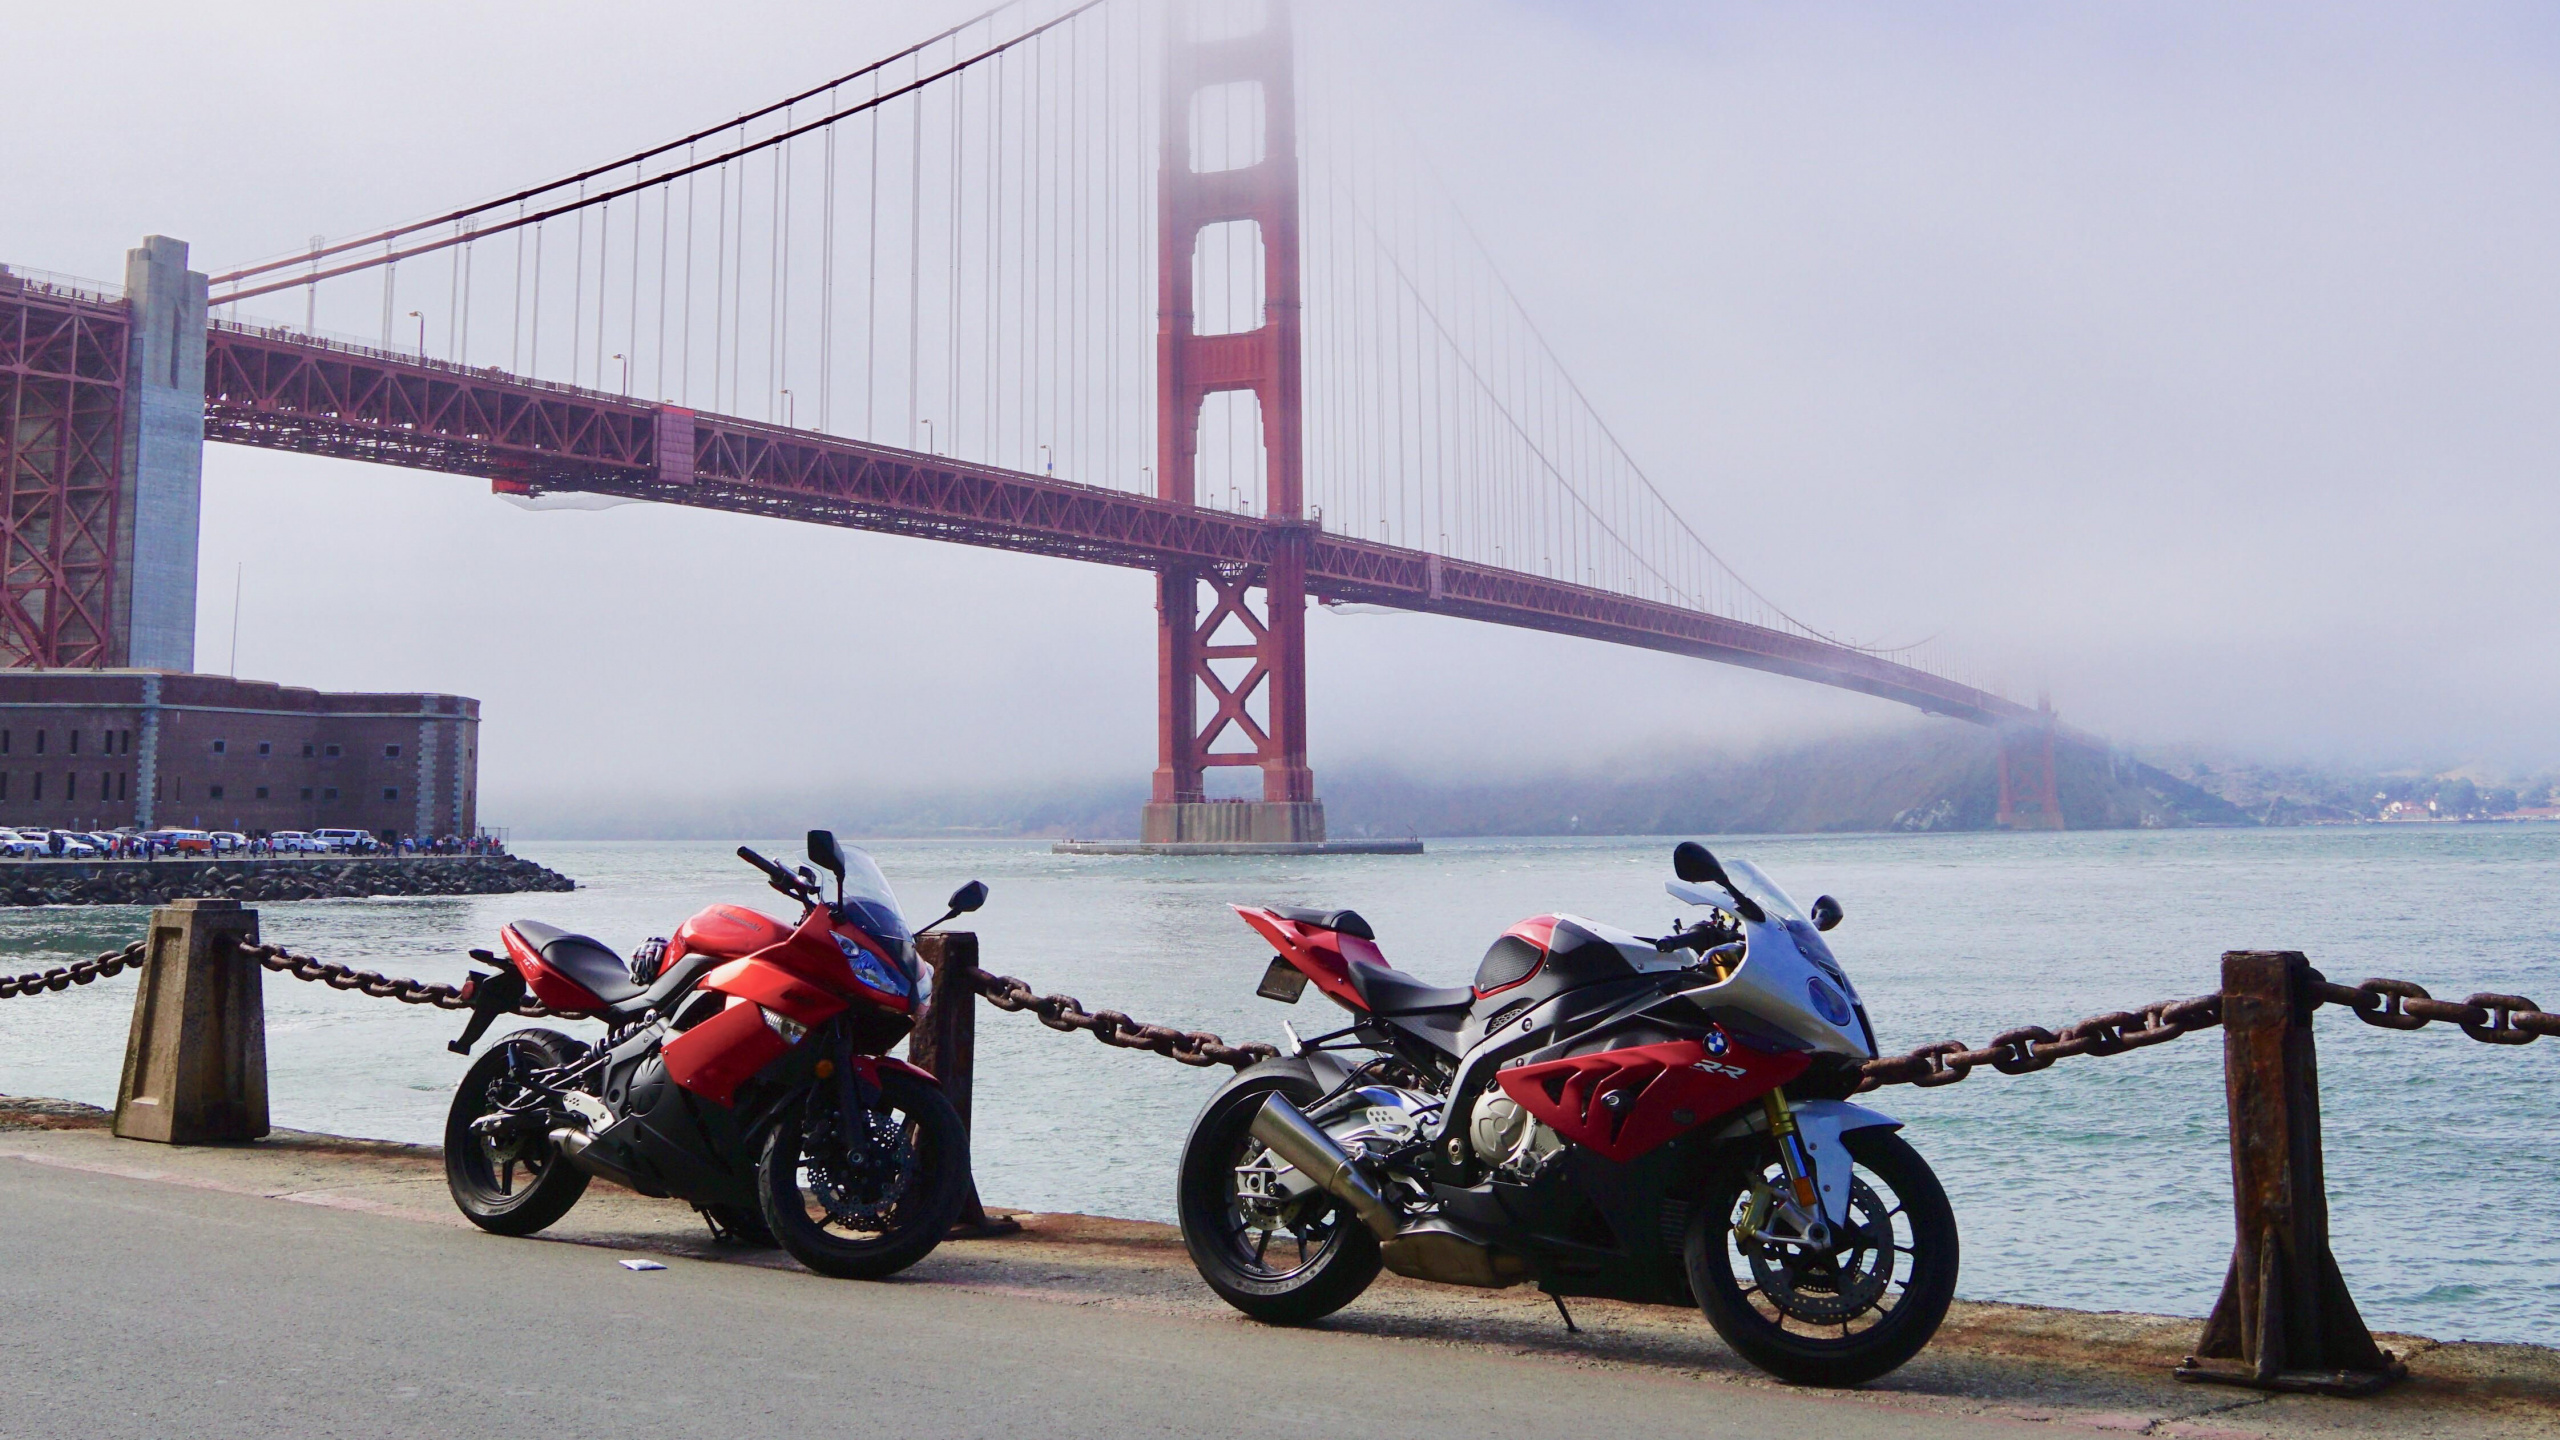 Motocicleta Roja y Negra Cerca Del Puente Golden Gate. Wallpaper in 2560x1440 Resolution